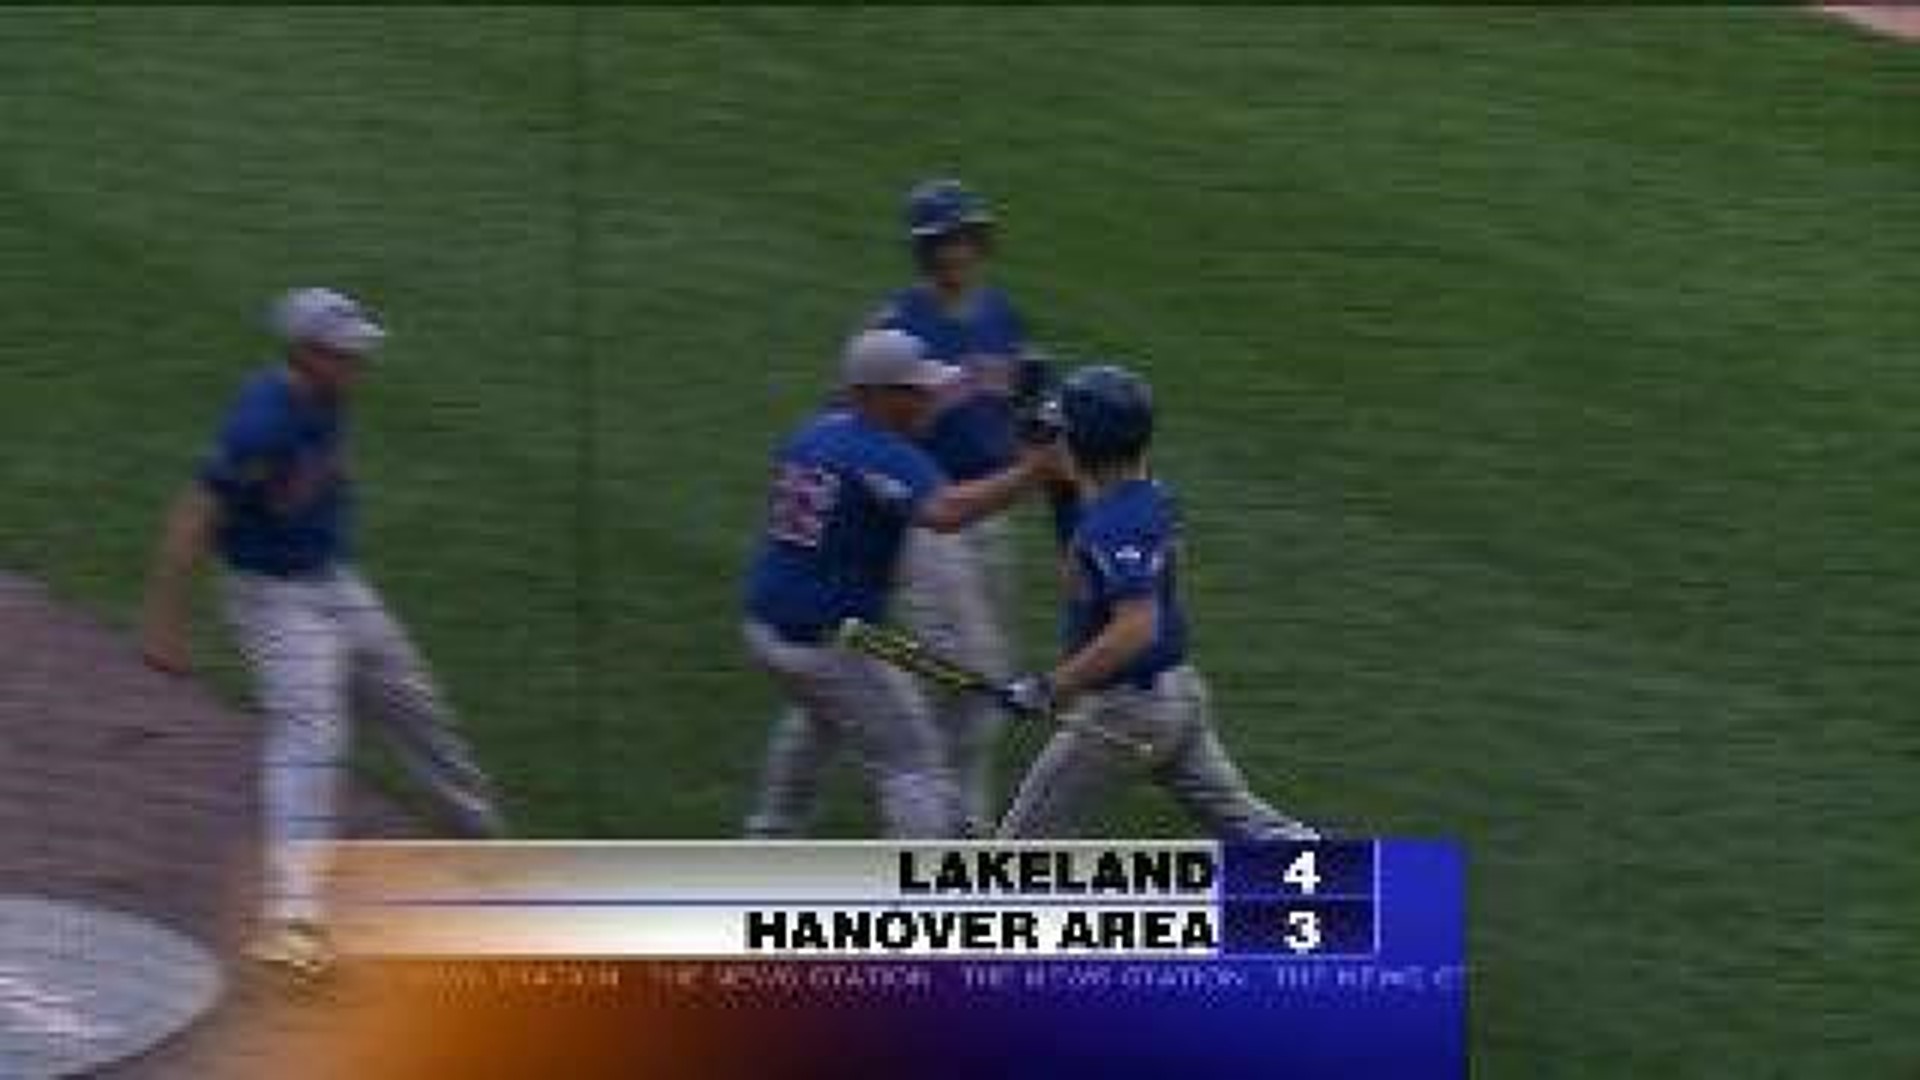 Lakeland vs Hanover Area BaseballVER AREA BBALL